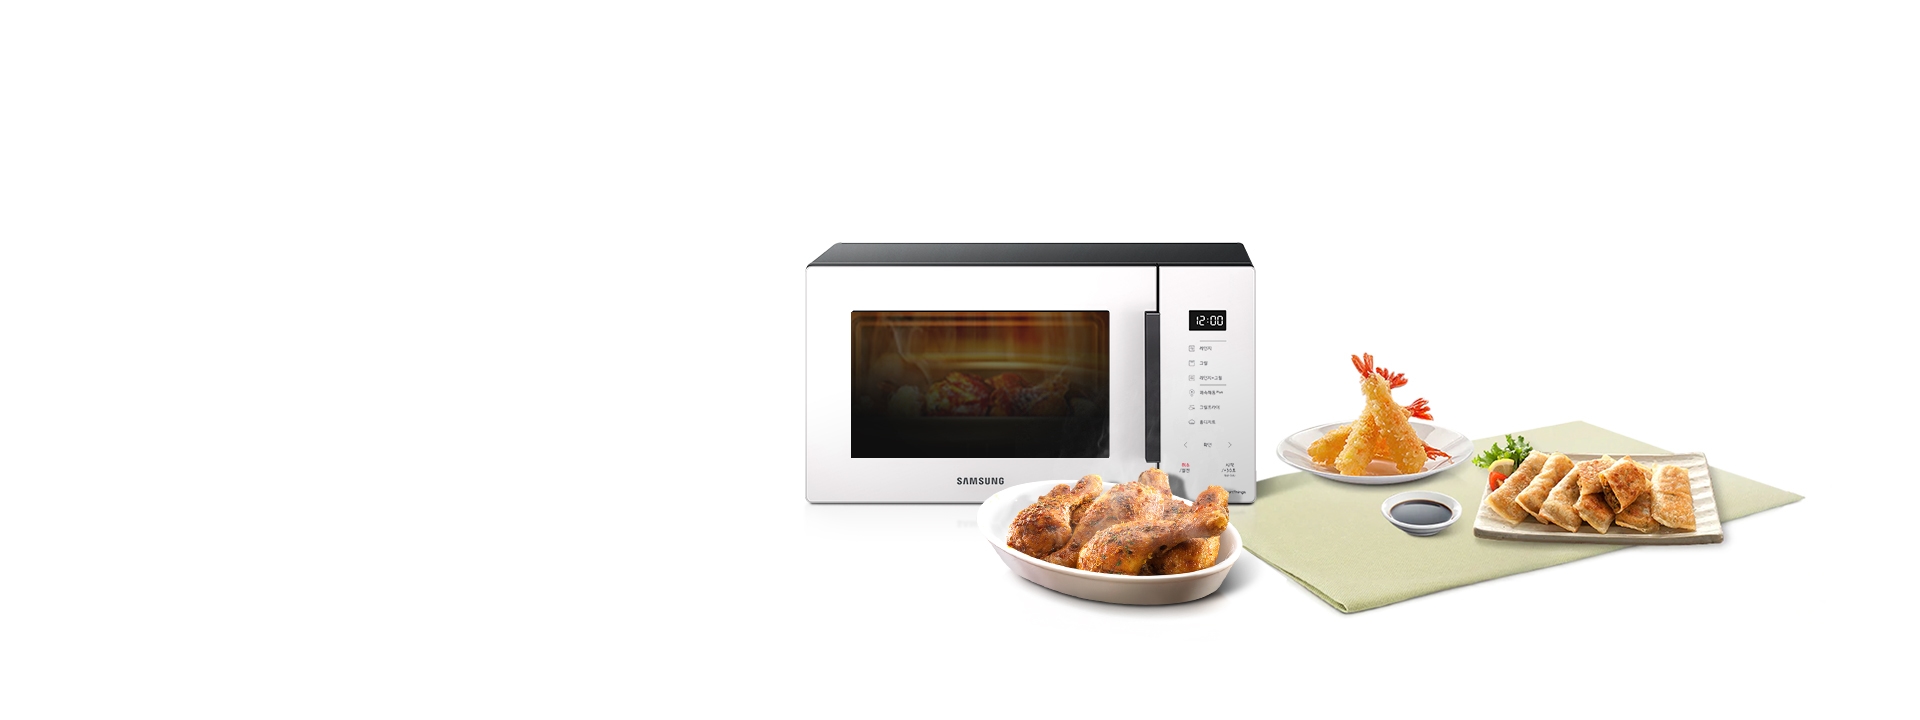 BESPOKE 전자레인지 23L (스마트 쿡) 글램 화이트 제품과 제품의 그릴프라이 기능으로 조리한 치킨, 만두, 새우튀김, 간장이 보여집니다.